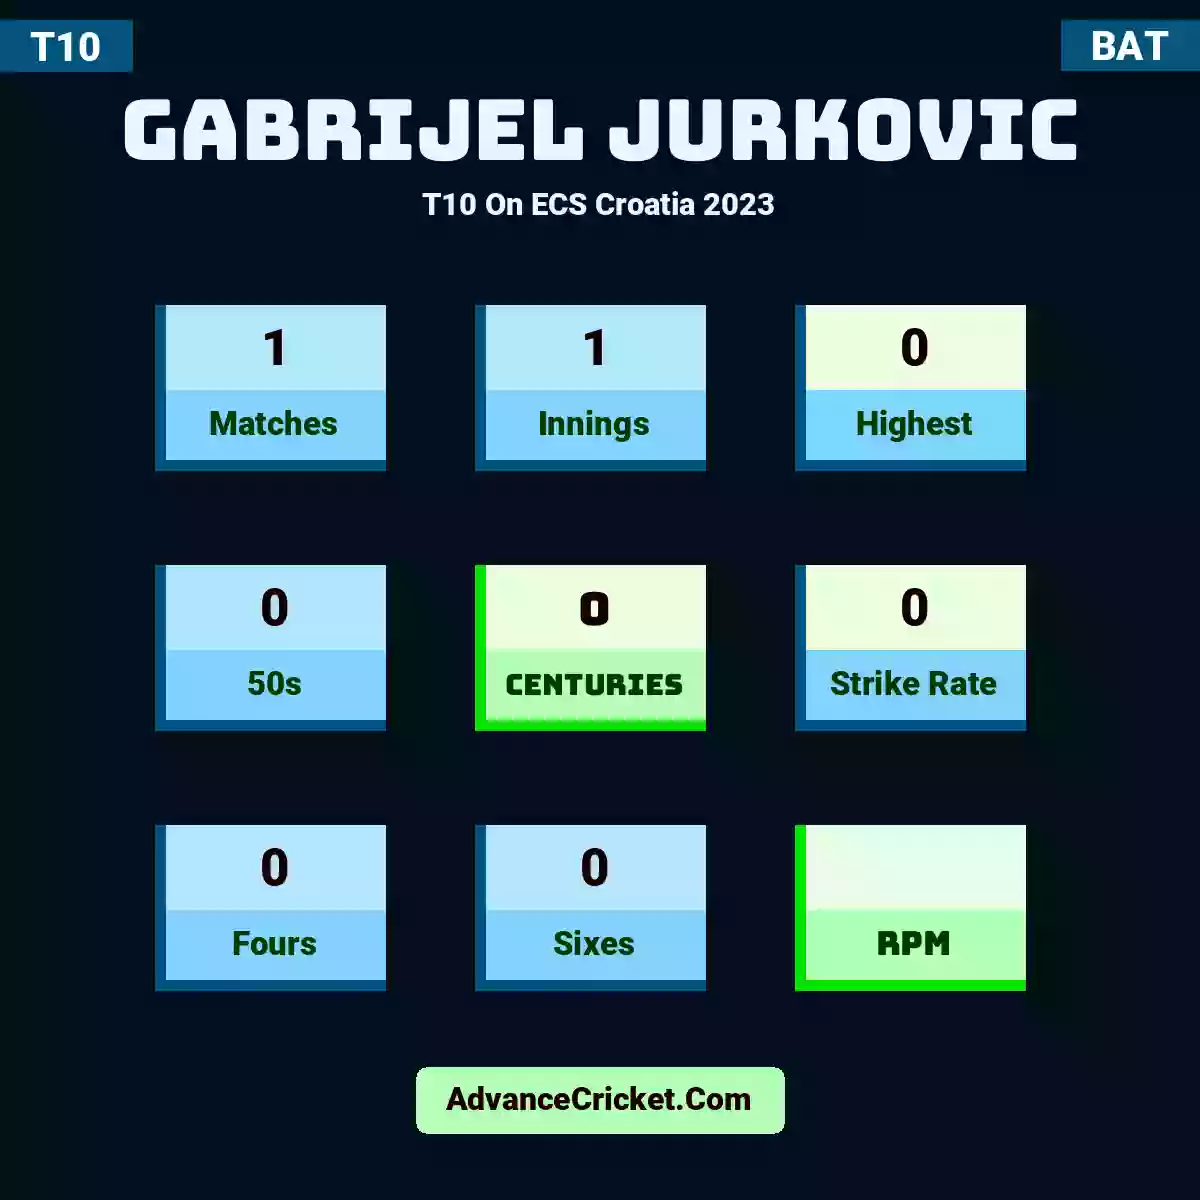 Gabrijel Jurkovic T10  On ECS Croatia 2023, Gabrijel Jurkovic played 1 matches, scored 0 runs as highest, 0 half-centuries, and 0 centuries, with a strike rate of 0. G.Jurkovic hit 0 fours and 0 sixes.